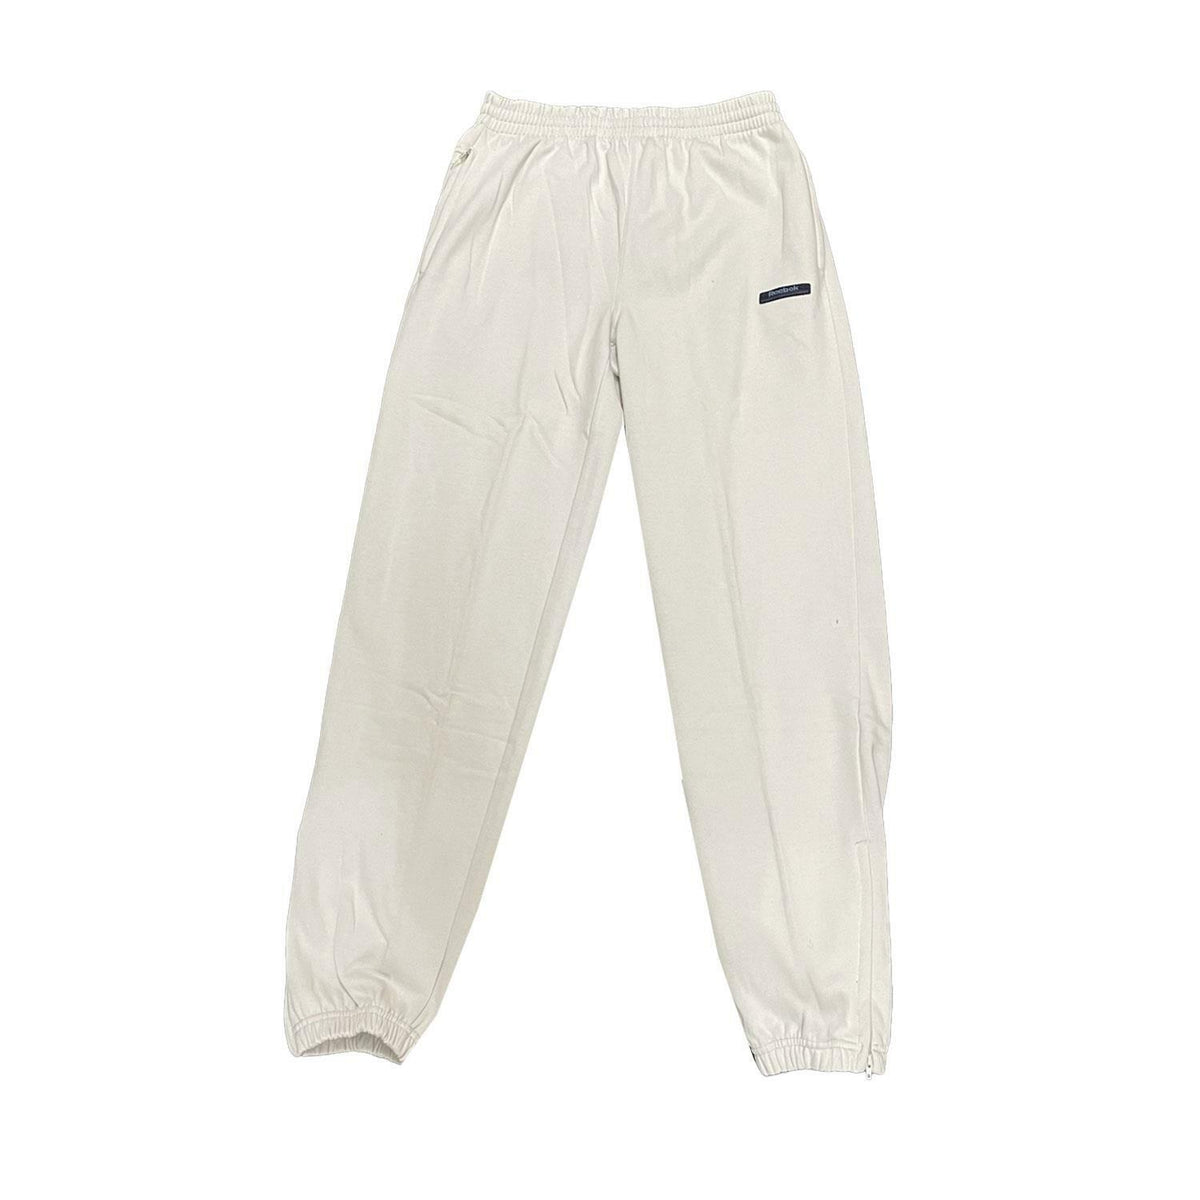 Reebok Original Clearance Athletic Department Track Pants - Off-White - Medium